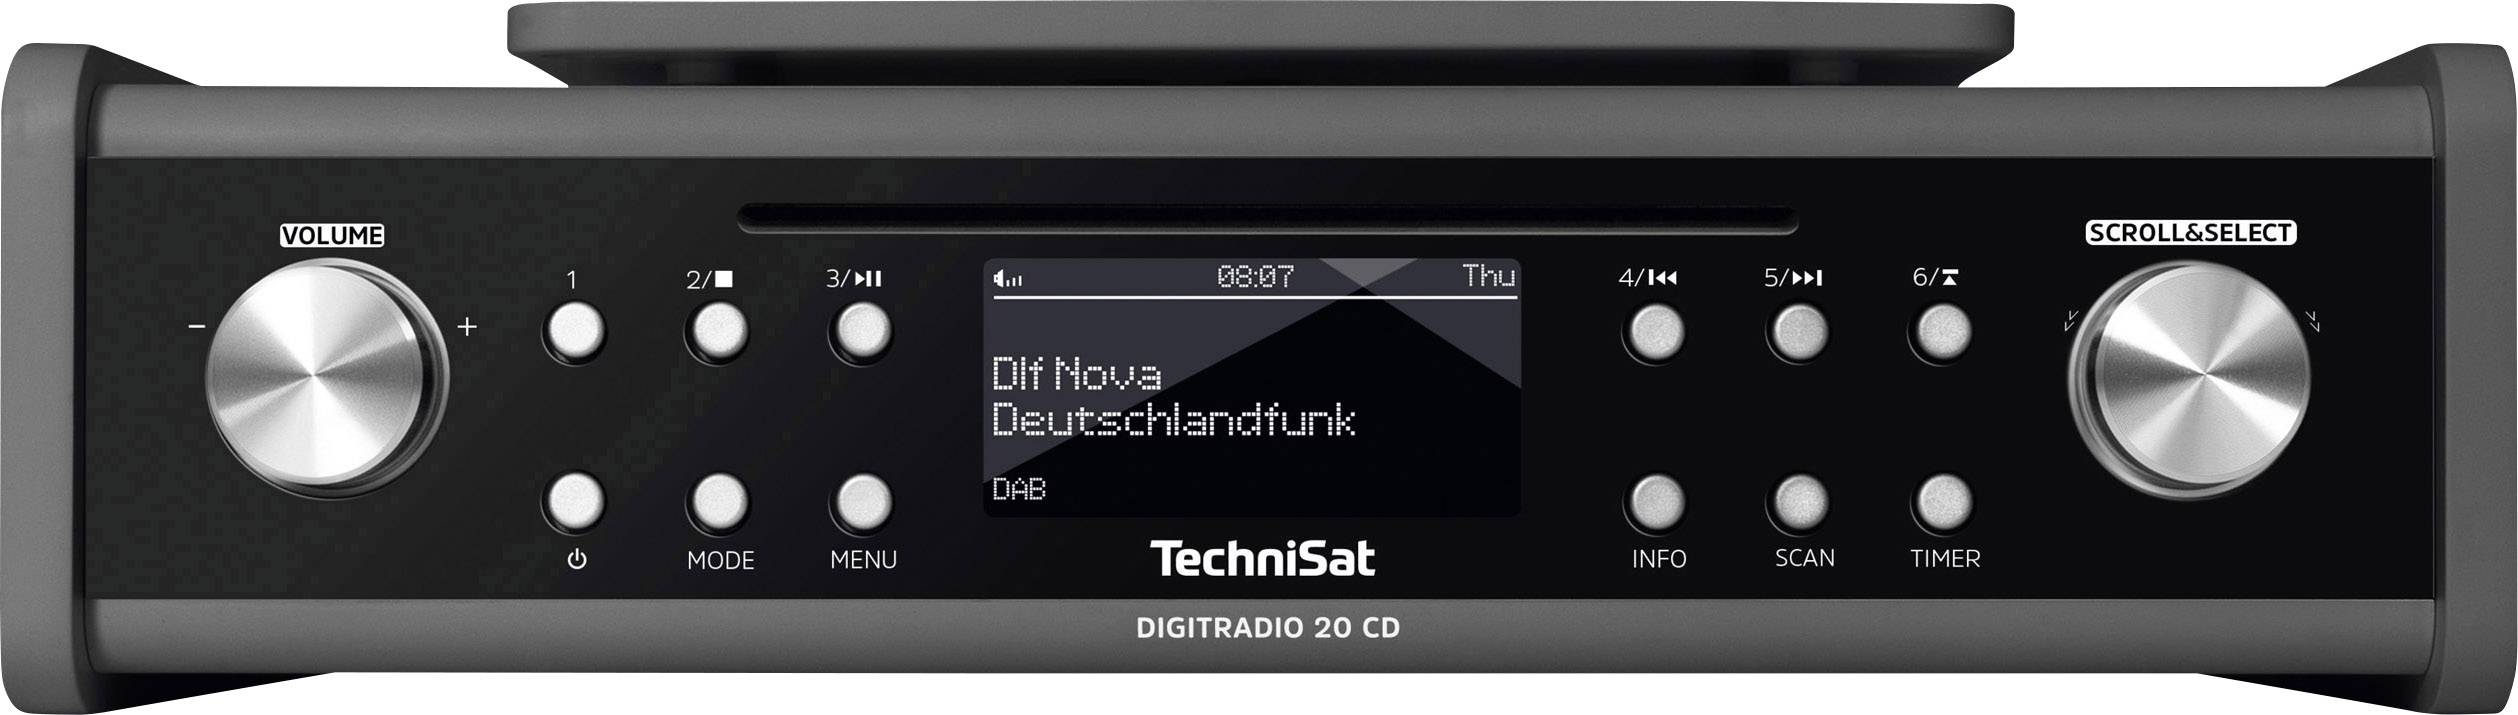 TECHNISAT DigitRadio 20 CD anthrazit